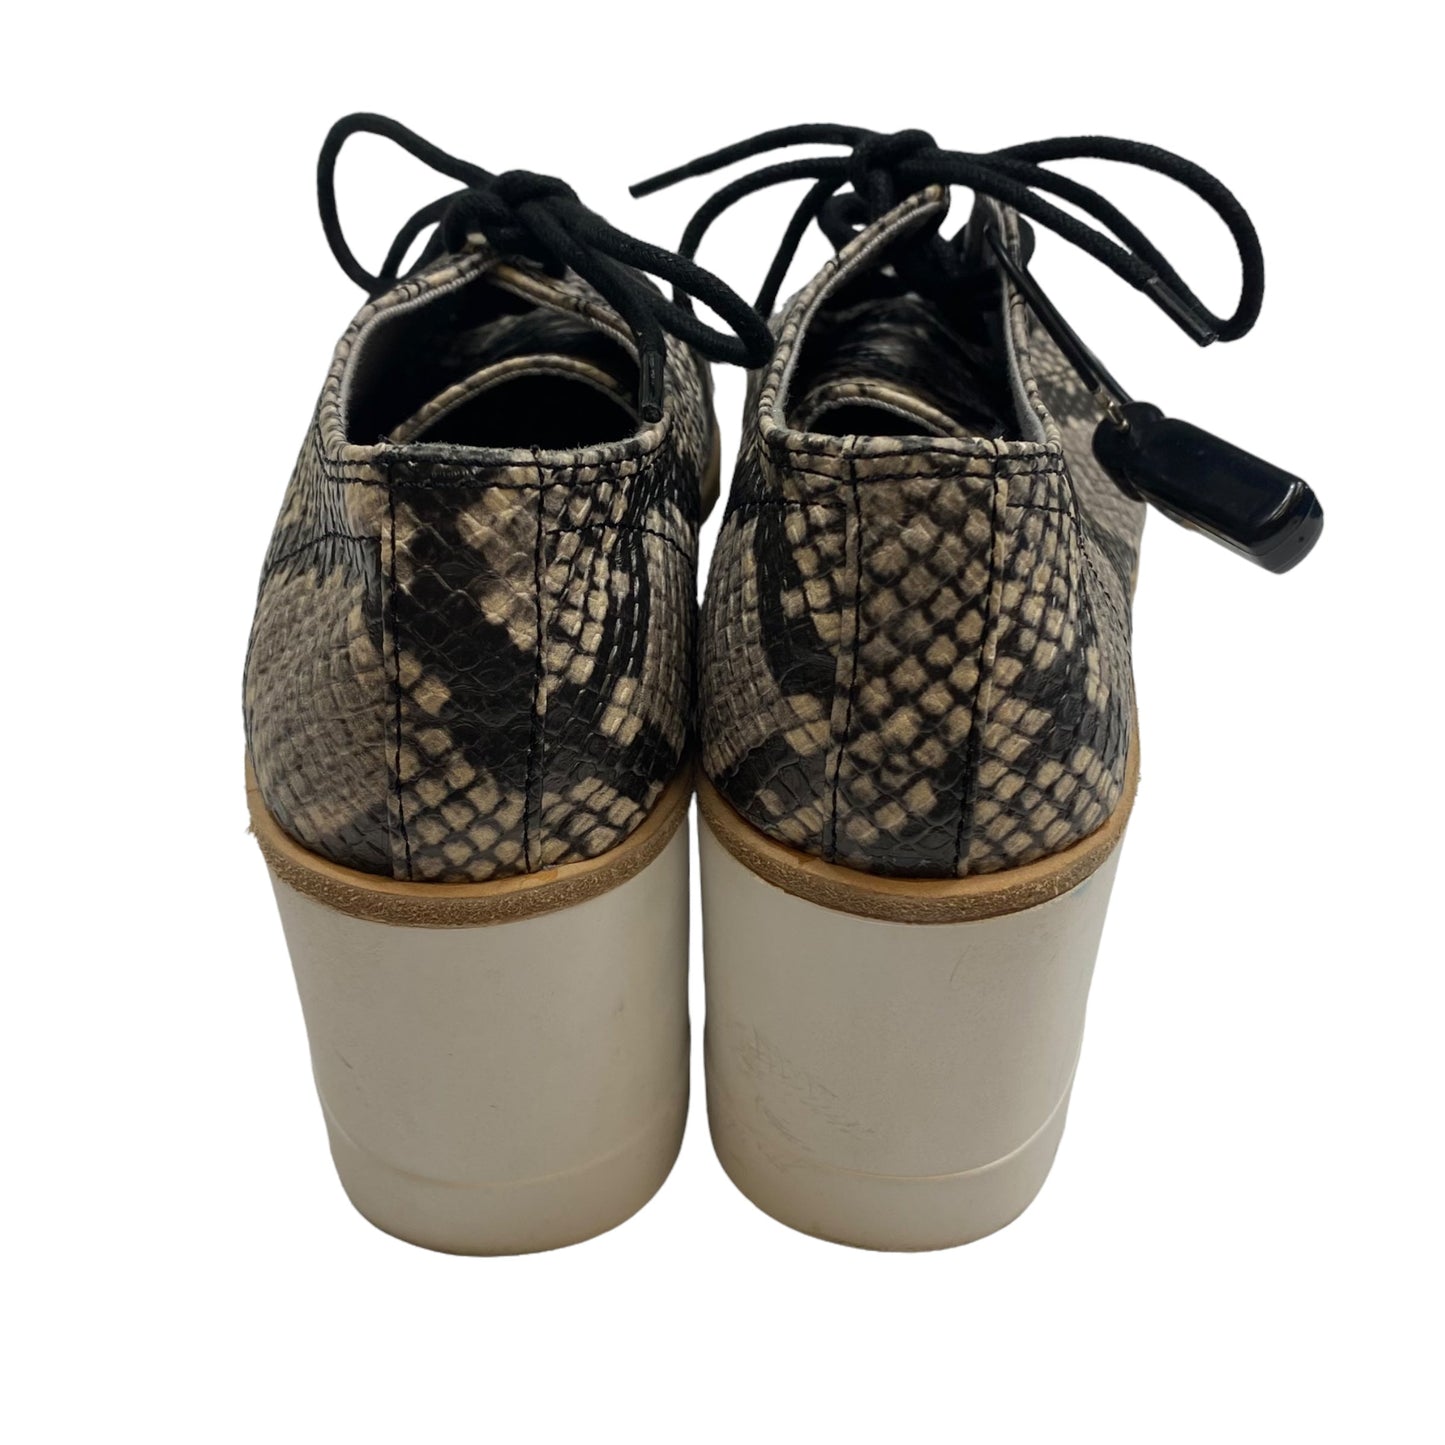 Snakeskin Print Shoes Flats Steve Madden, Size 7